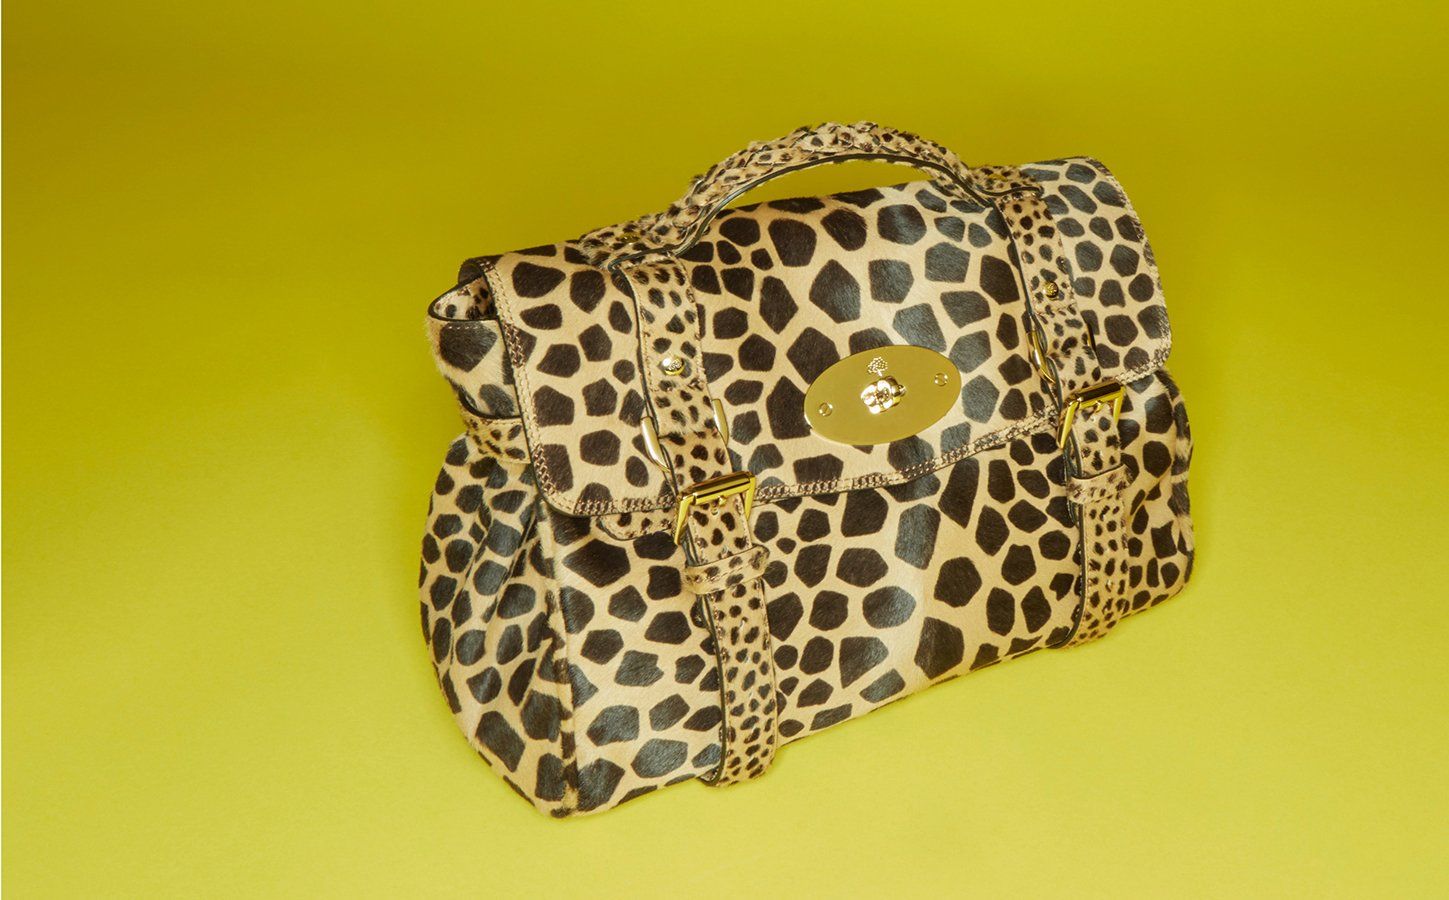 Mulberry Alexa handbag with leopard print